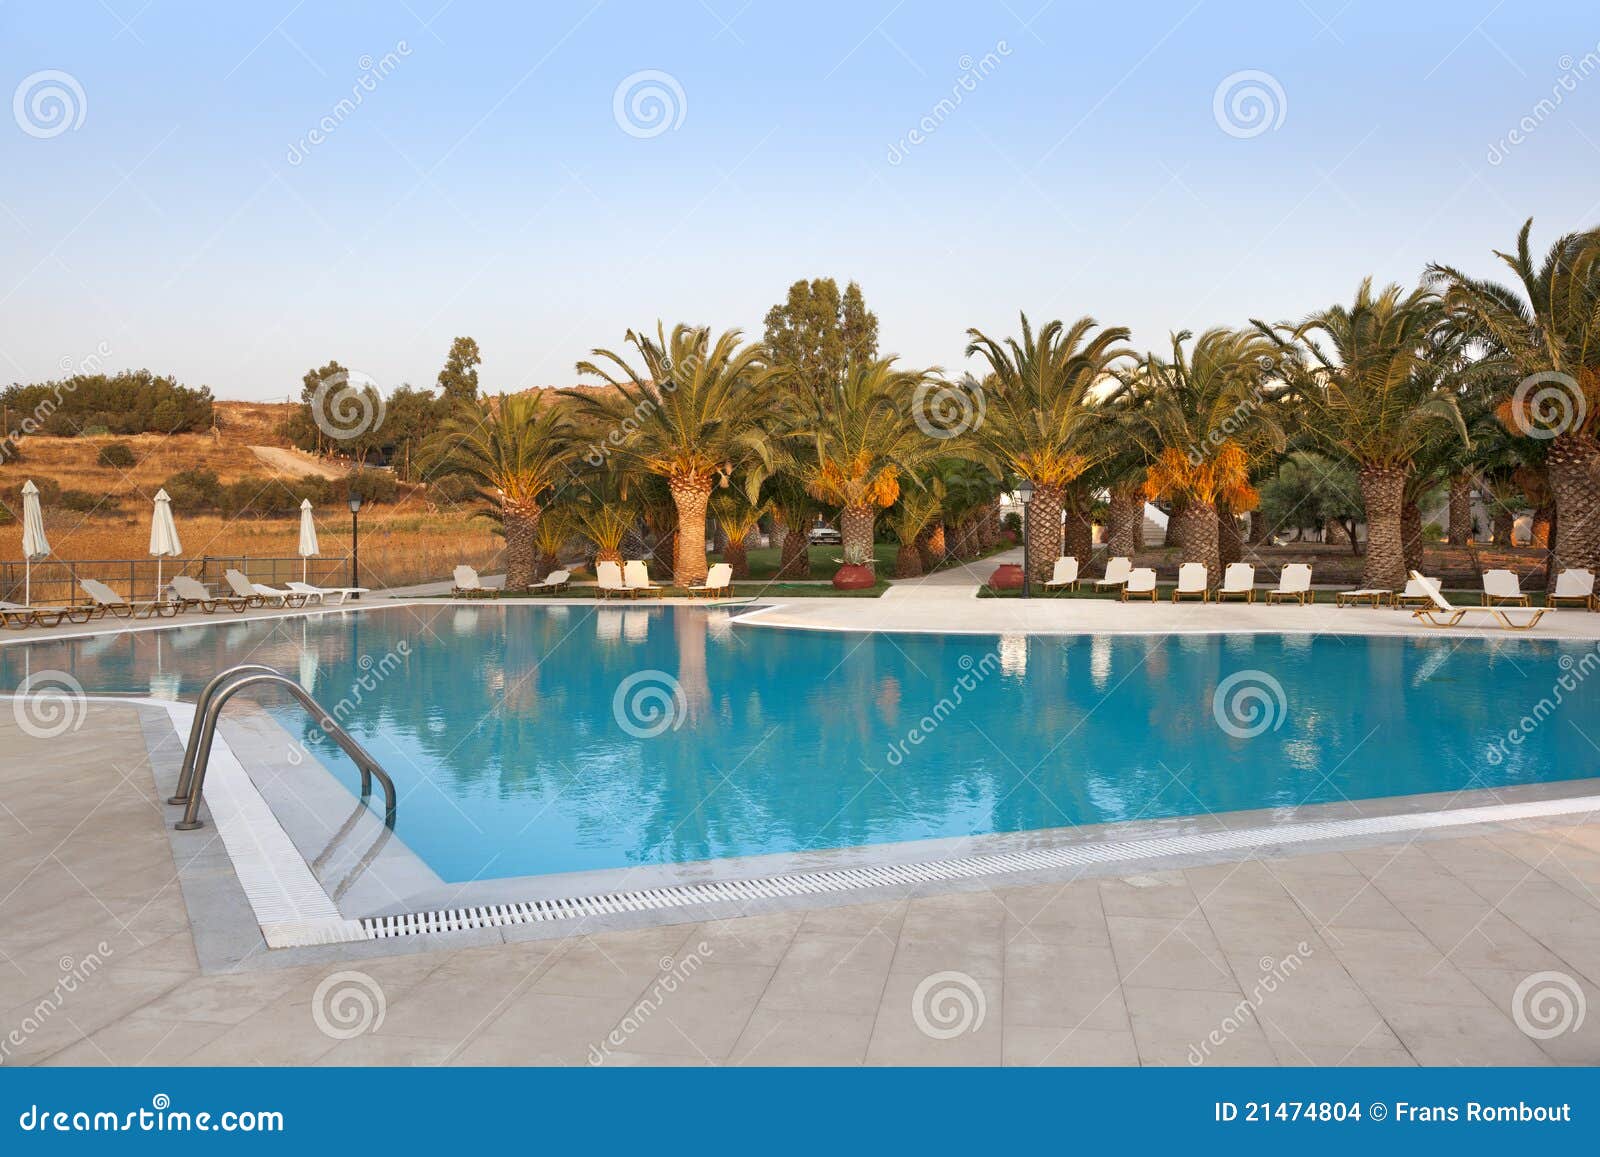 empty swimmingpool with palmtrees